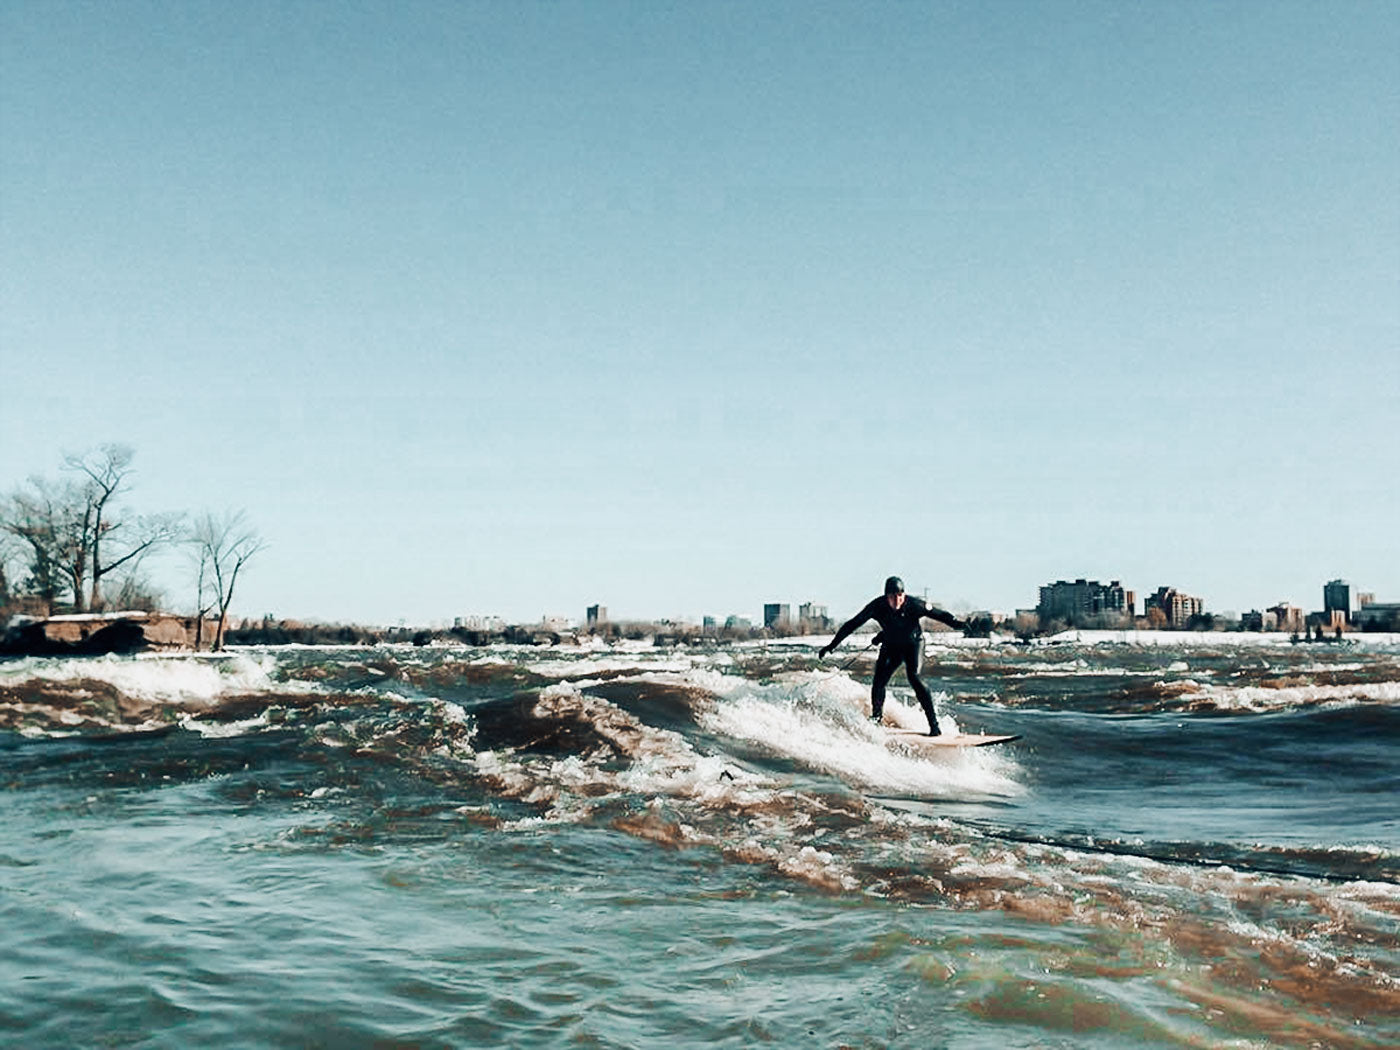 Michael Billinger River Surfing in the winter in Ottawa